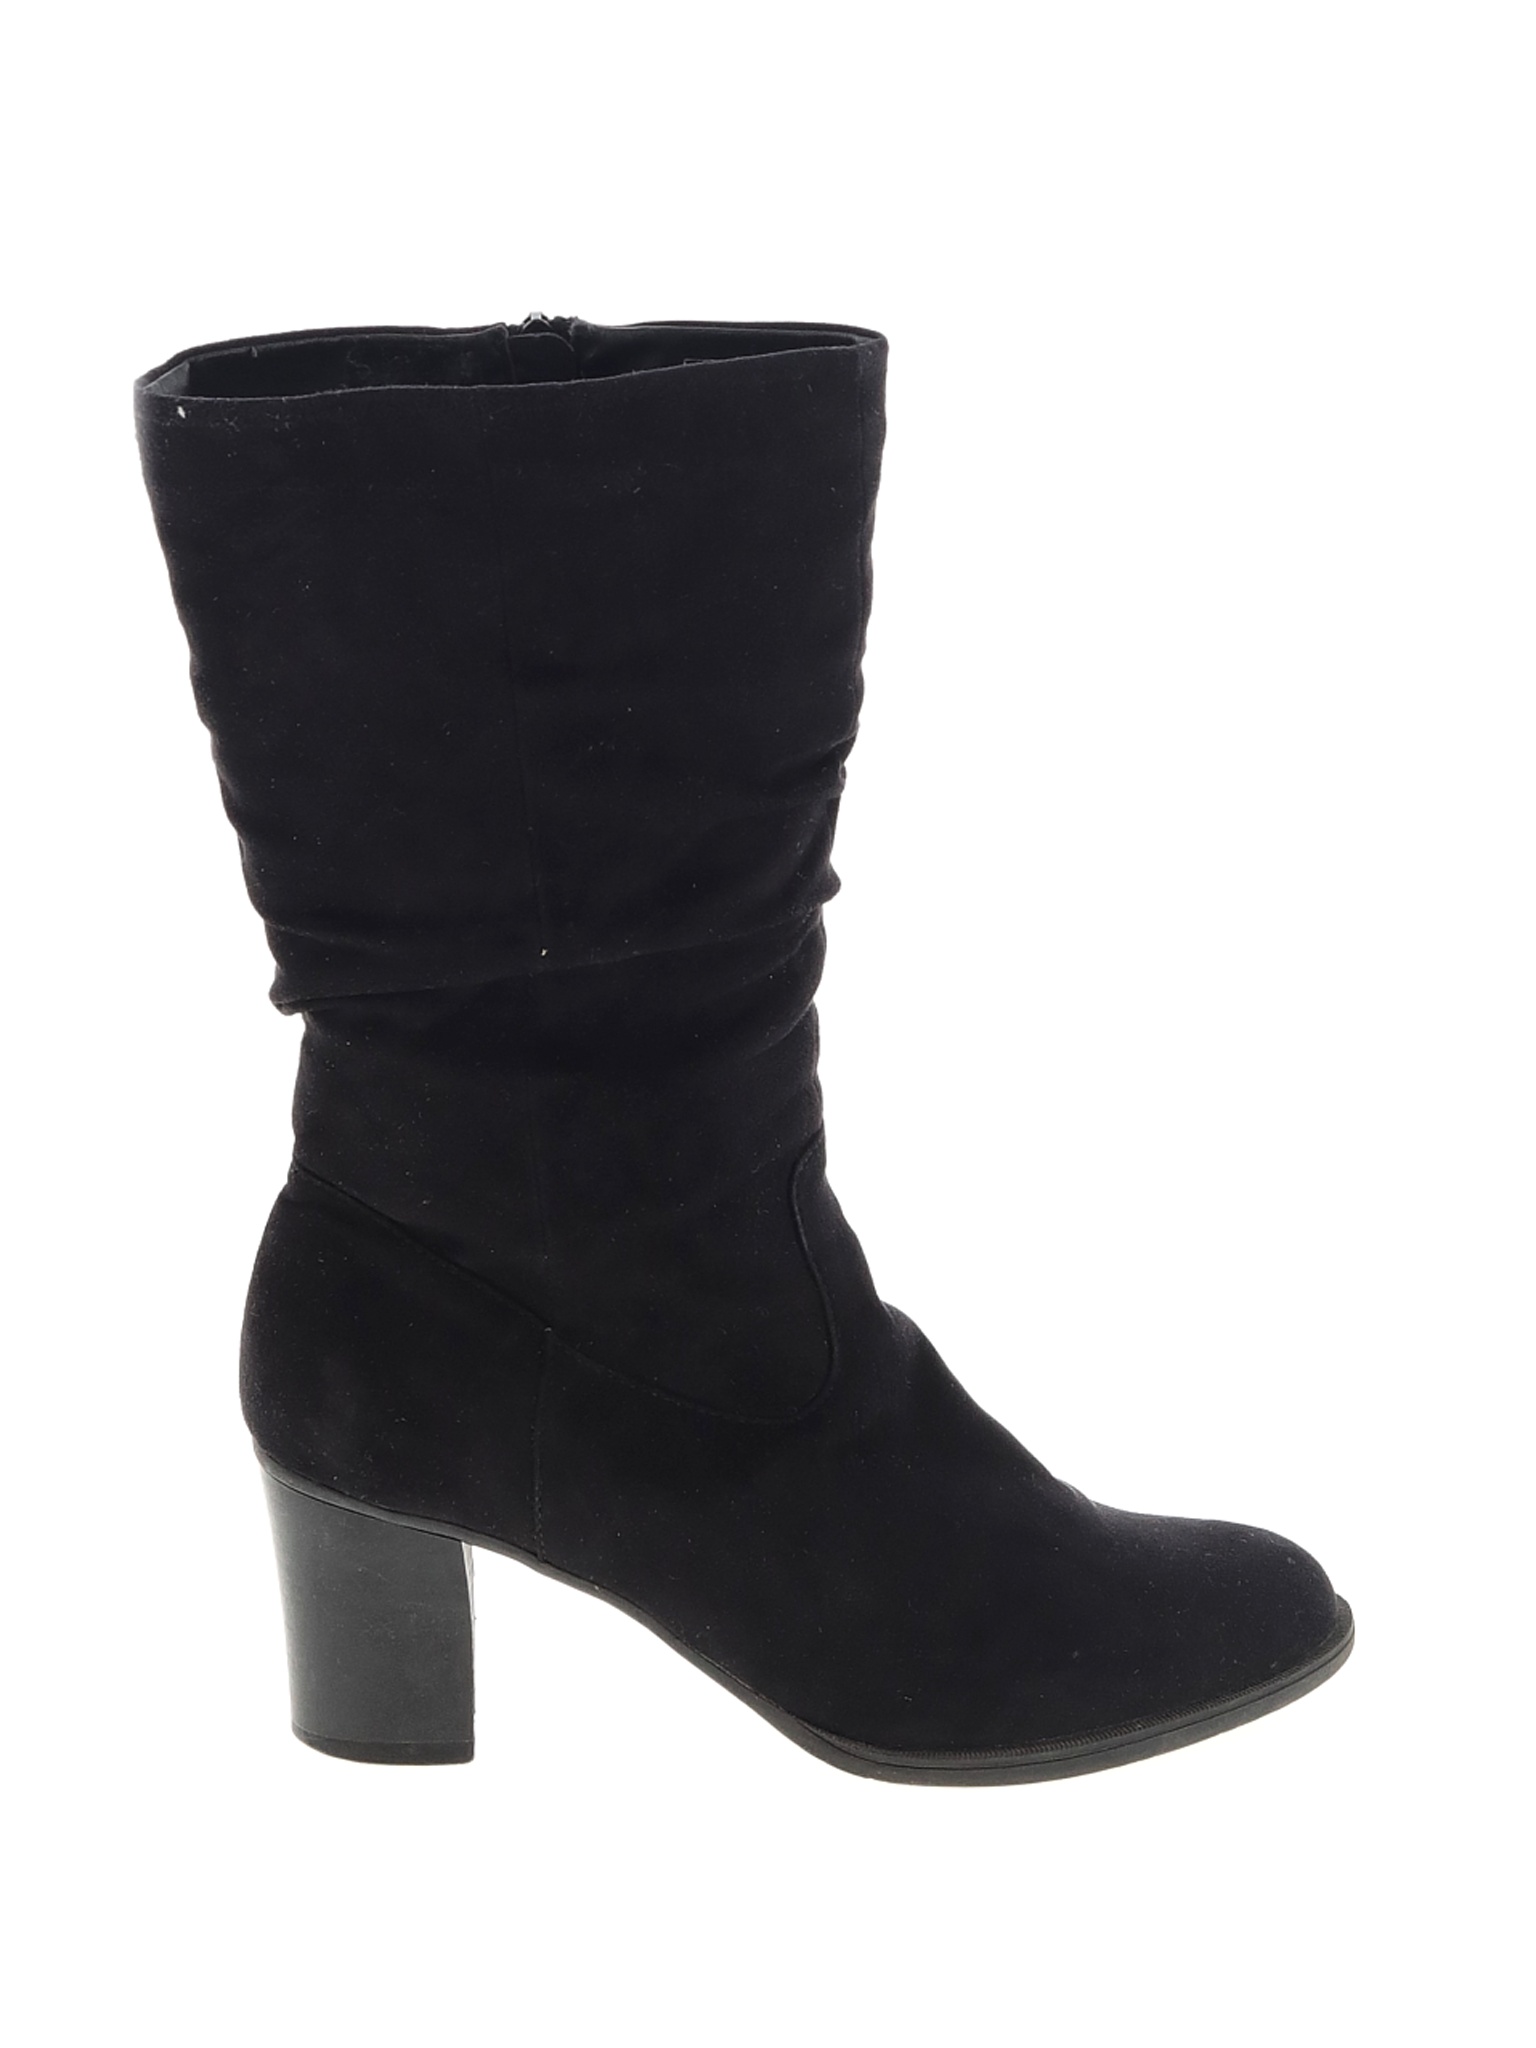 Claudia Ghizzani Women Black Boots EUR 39 | eBay